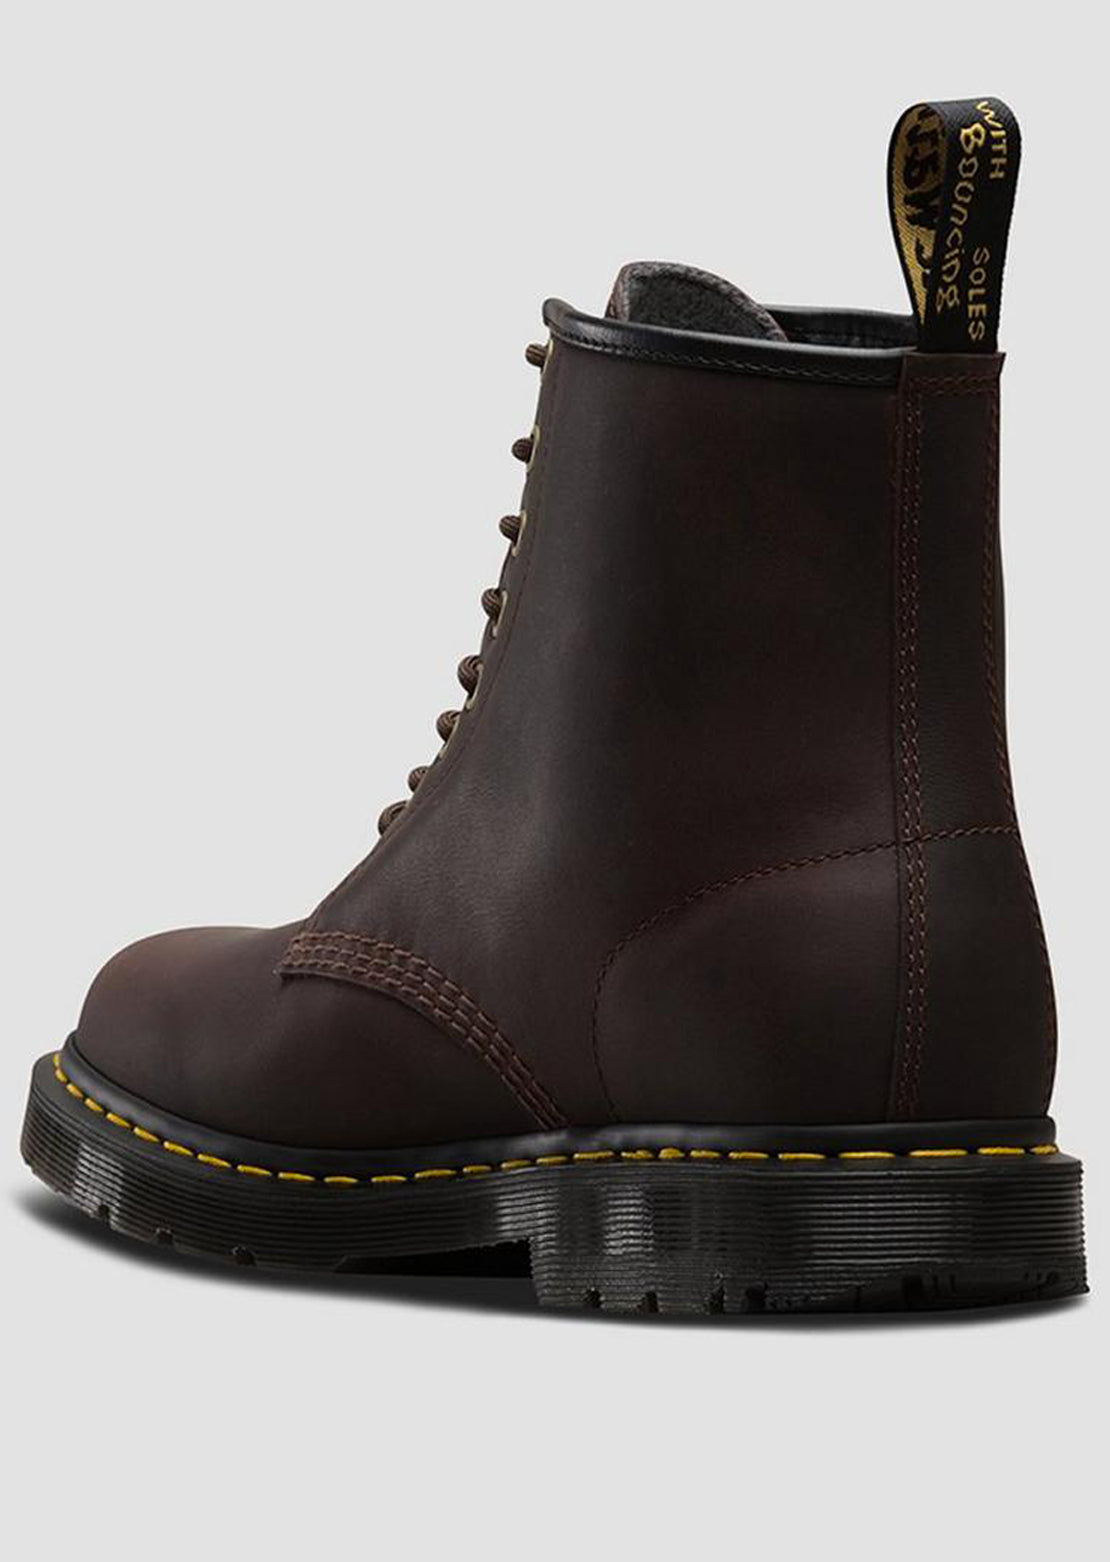 Dr.Martens Men’s 1460 Snowplow Wintergrip Boots Cocoa